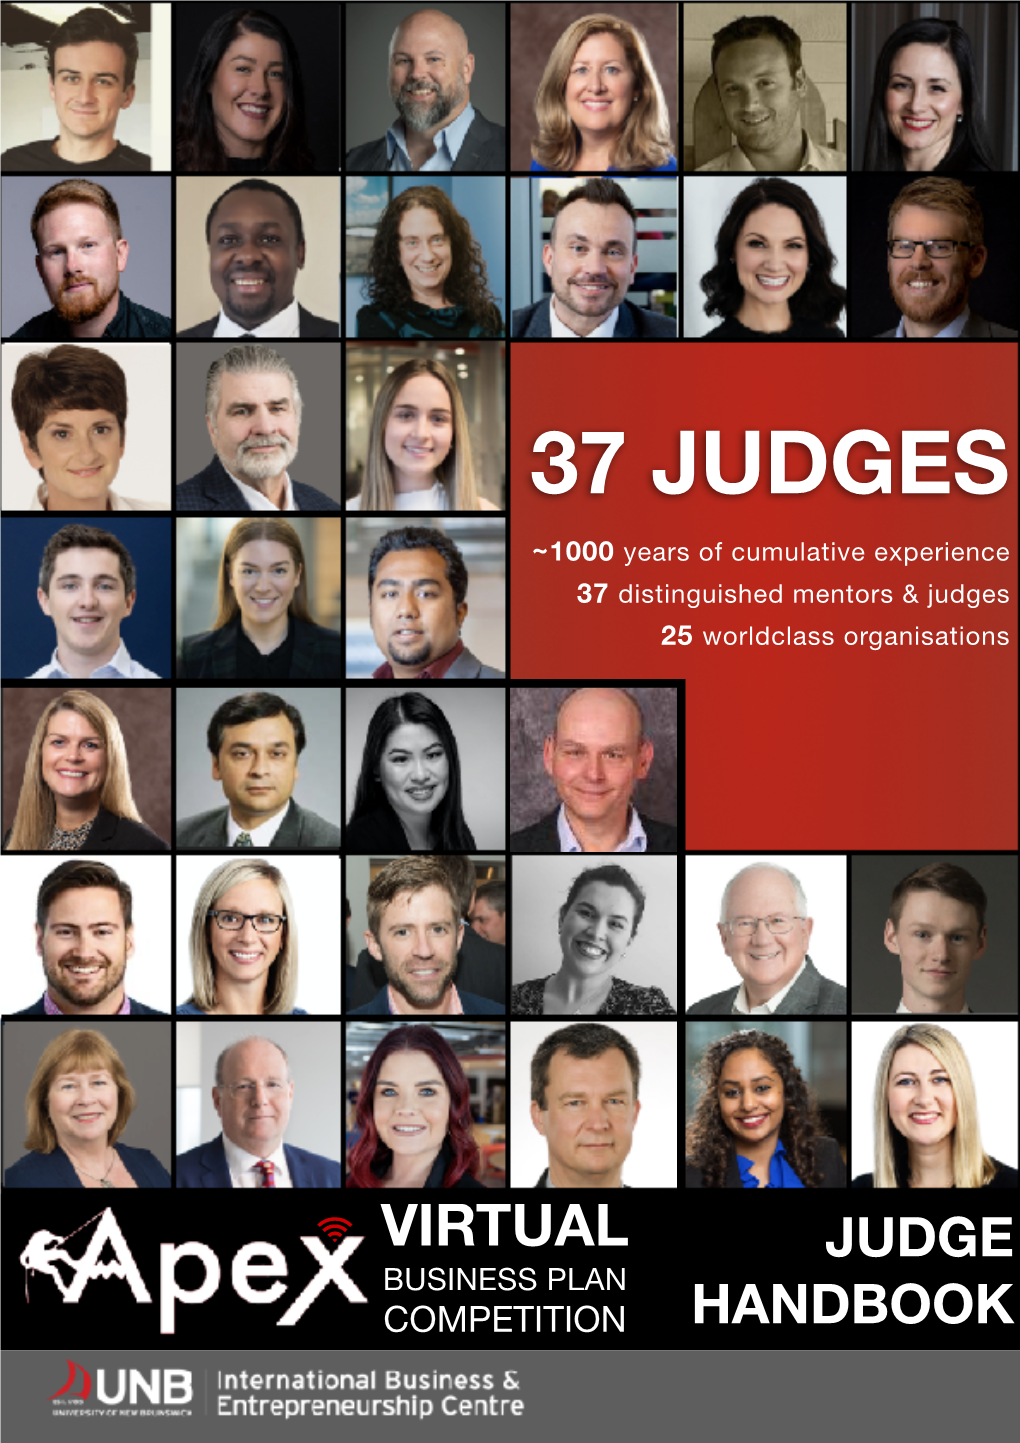 Judge Handbook Apex 2021